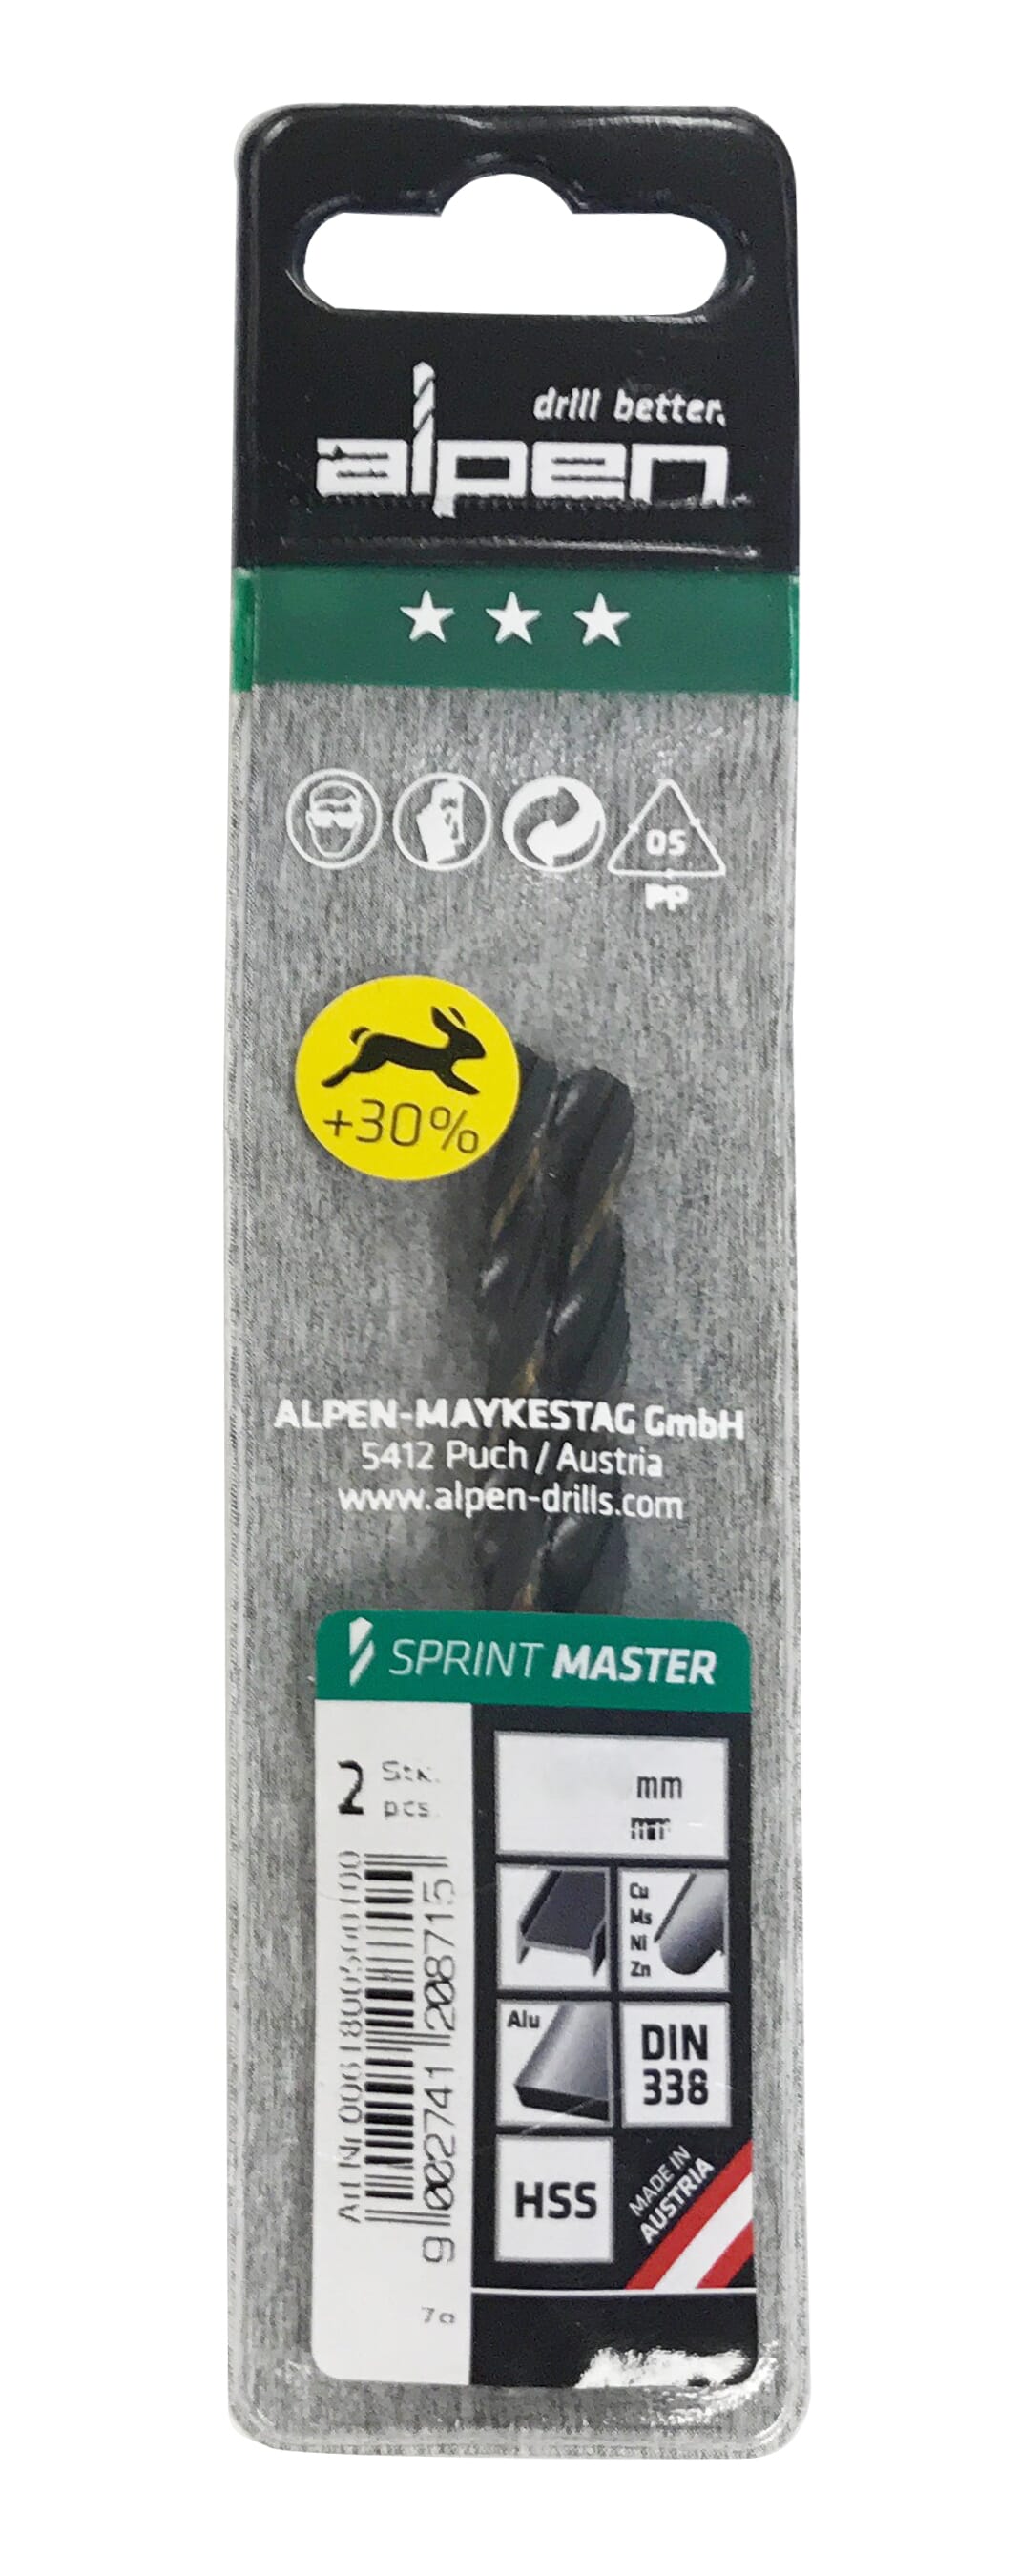 Alpen Series 618 Sprint Master In Plastic Wallet, 5.5 (Pkt Of 2)